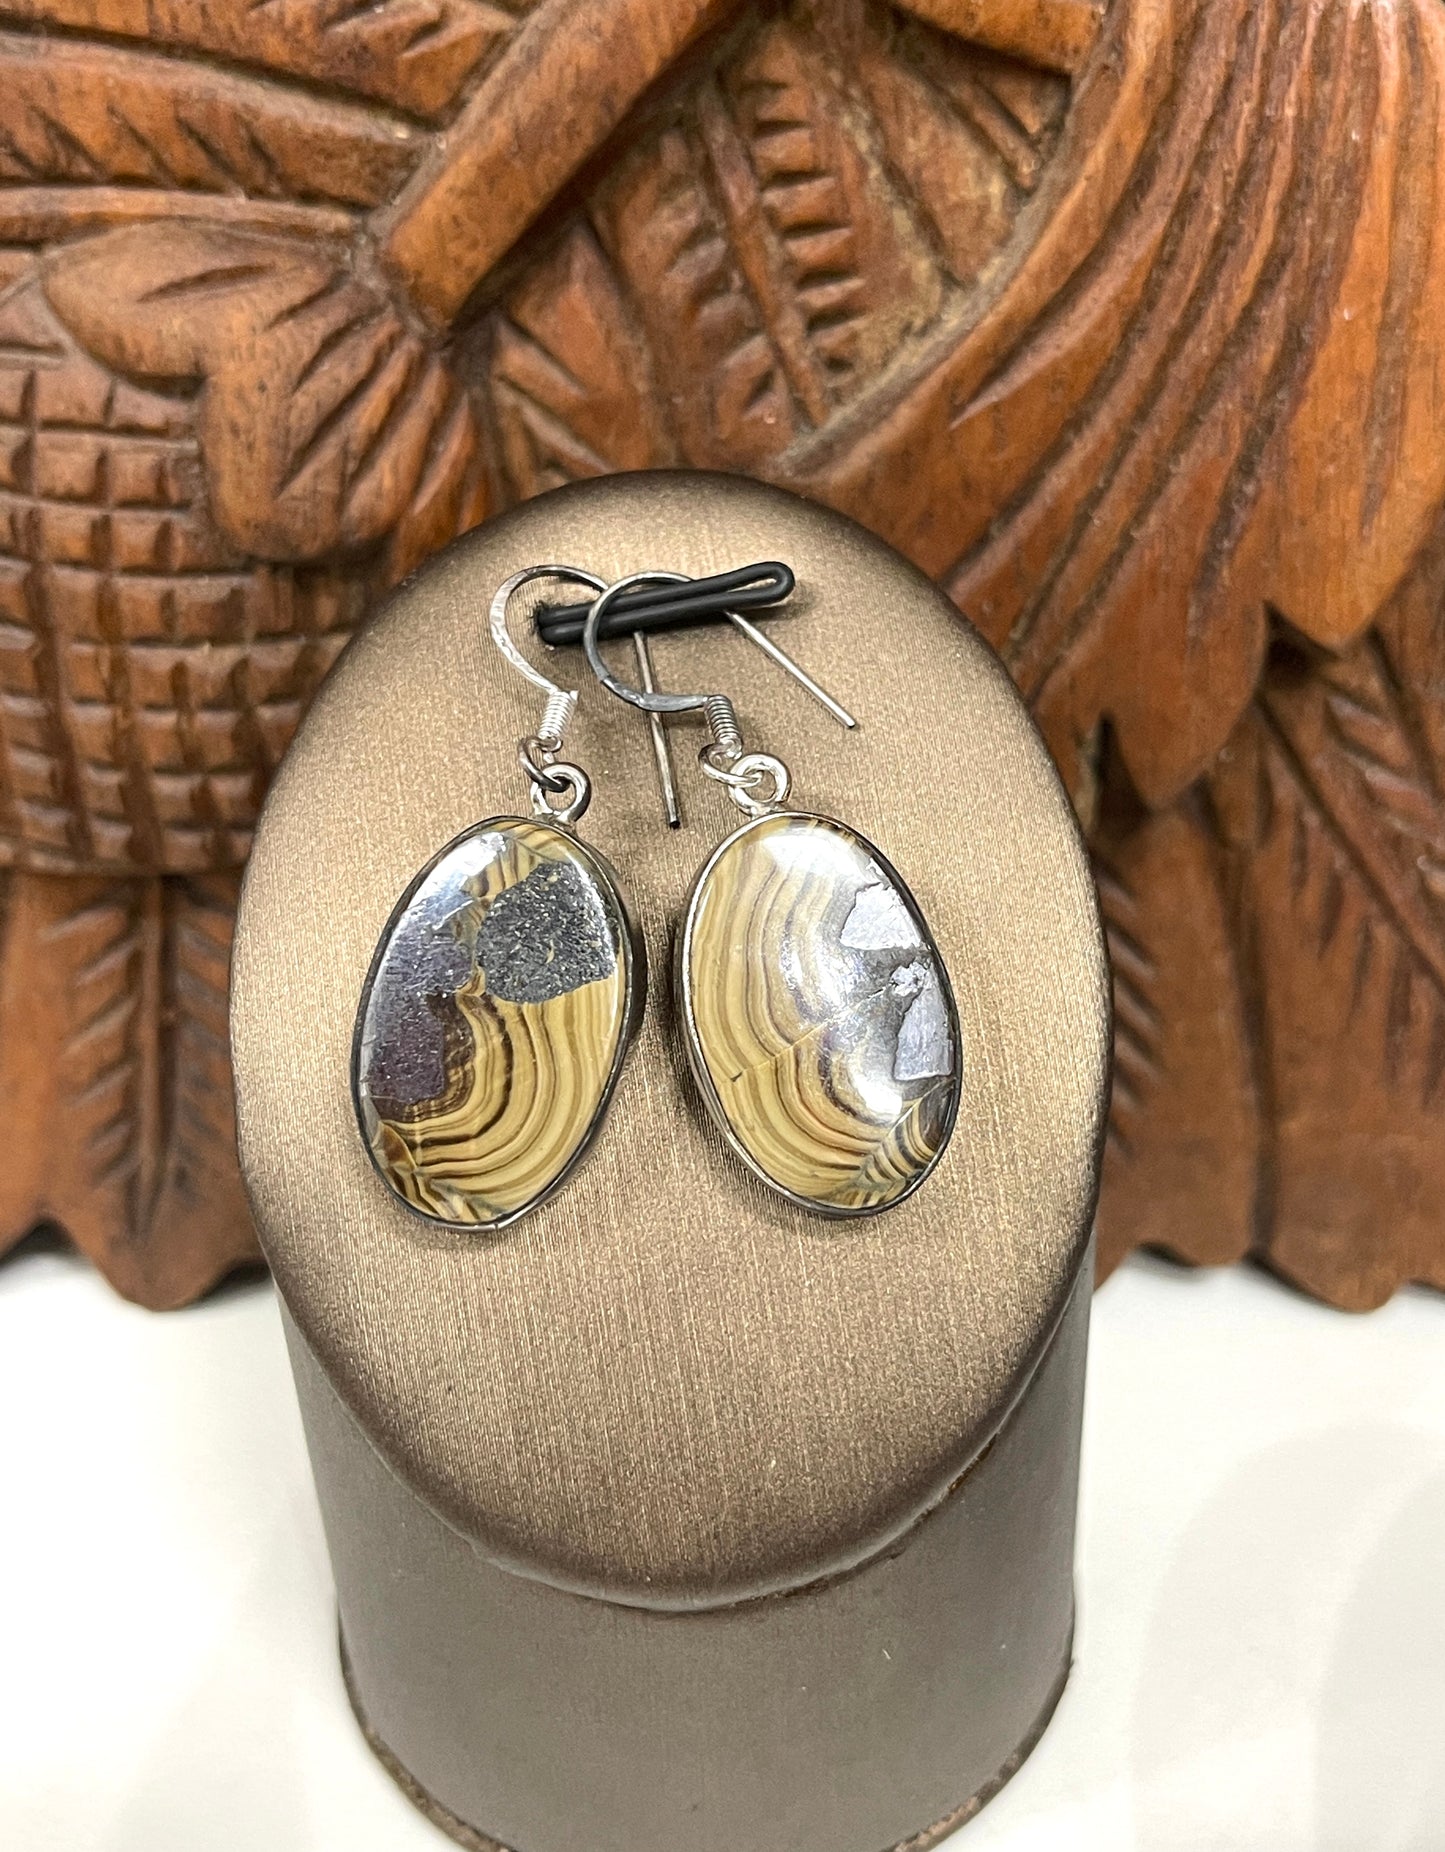 Schalenblende Earrings from Poland